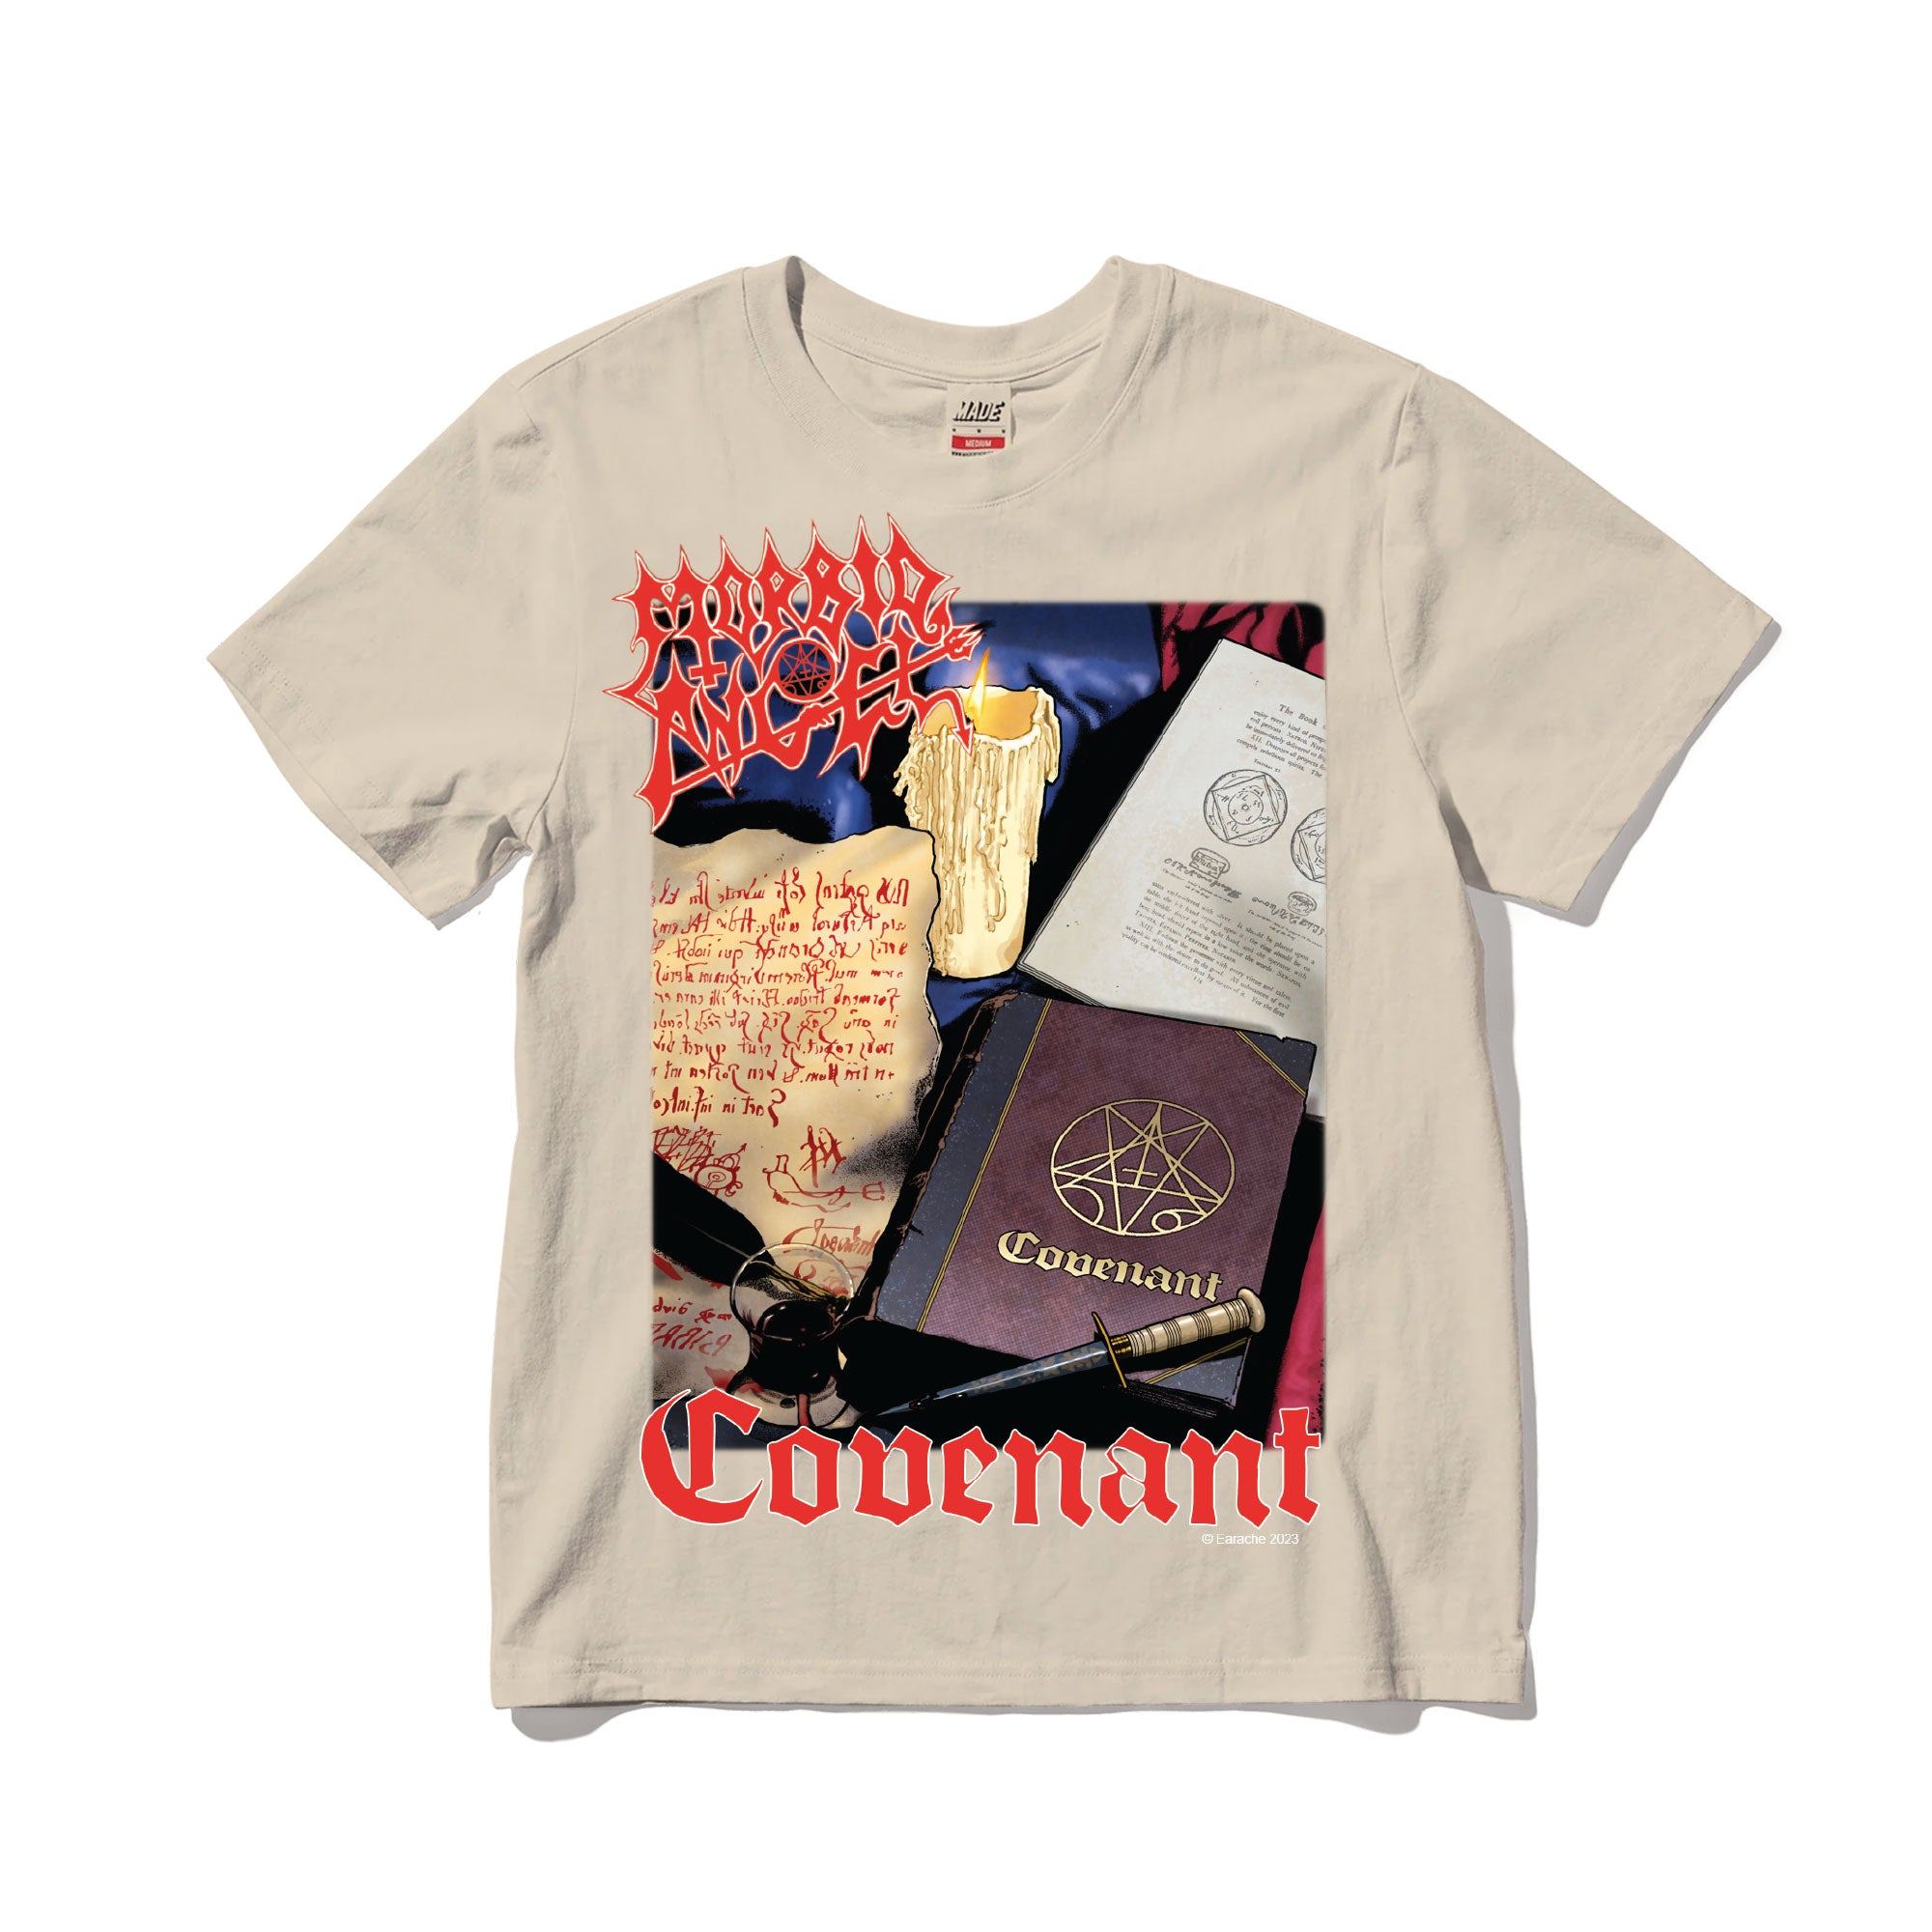 Morbid Angel "Covenant" Hi Res Sand T shirt